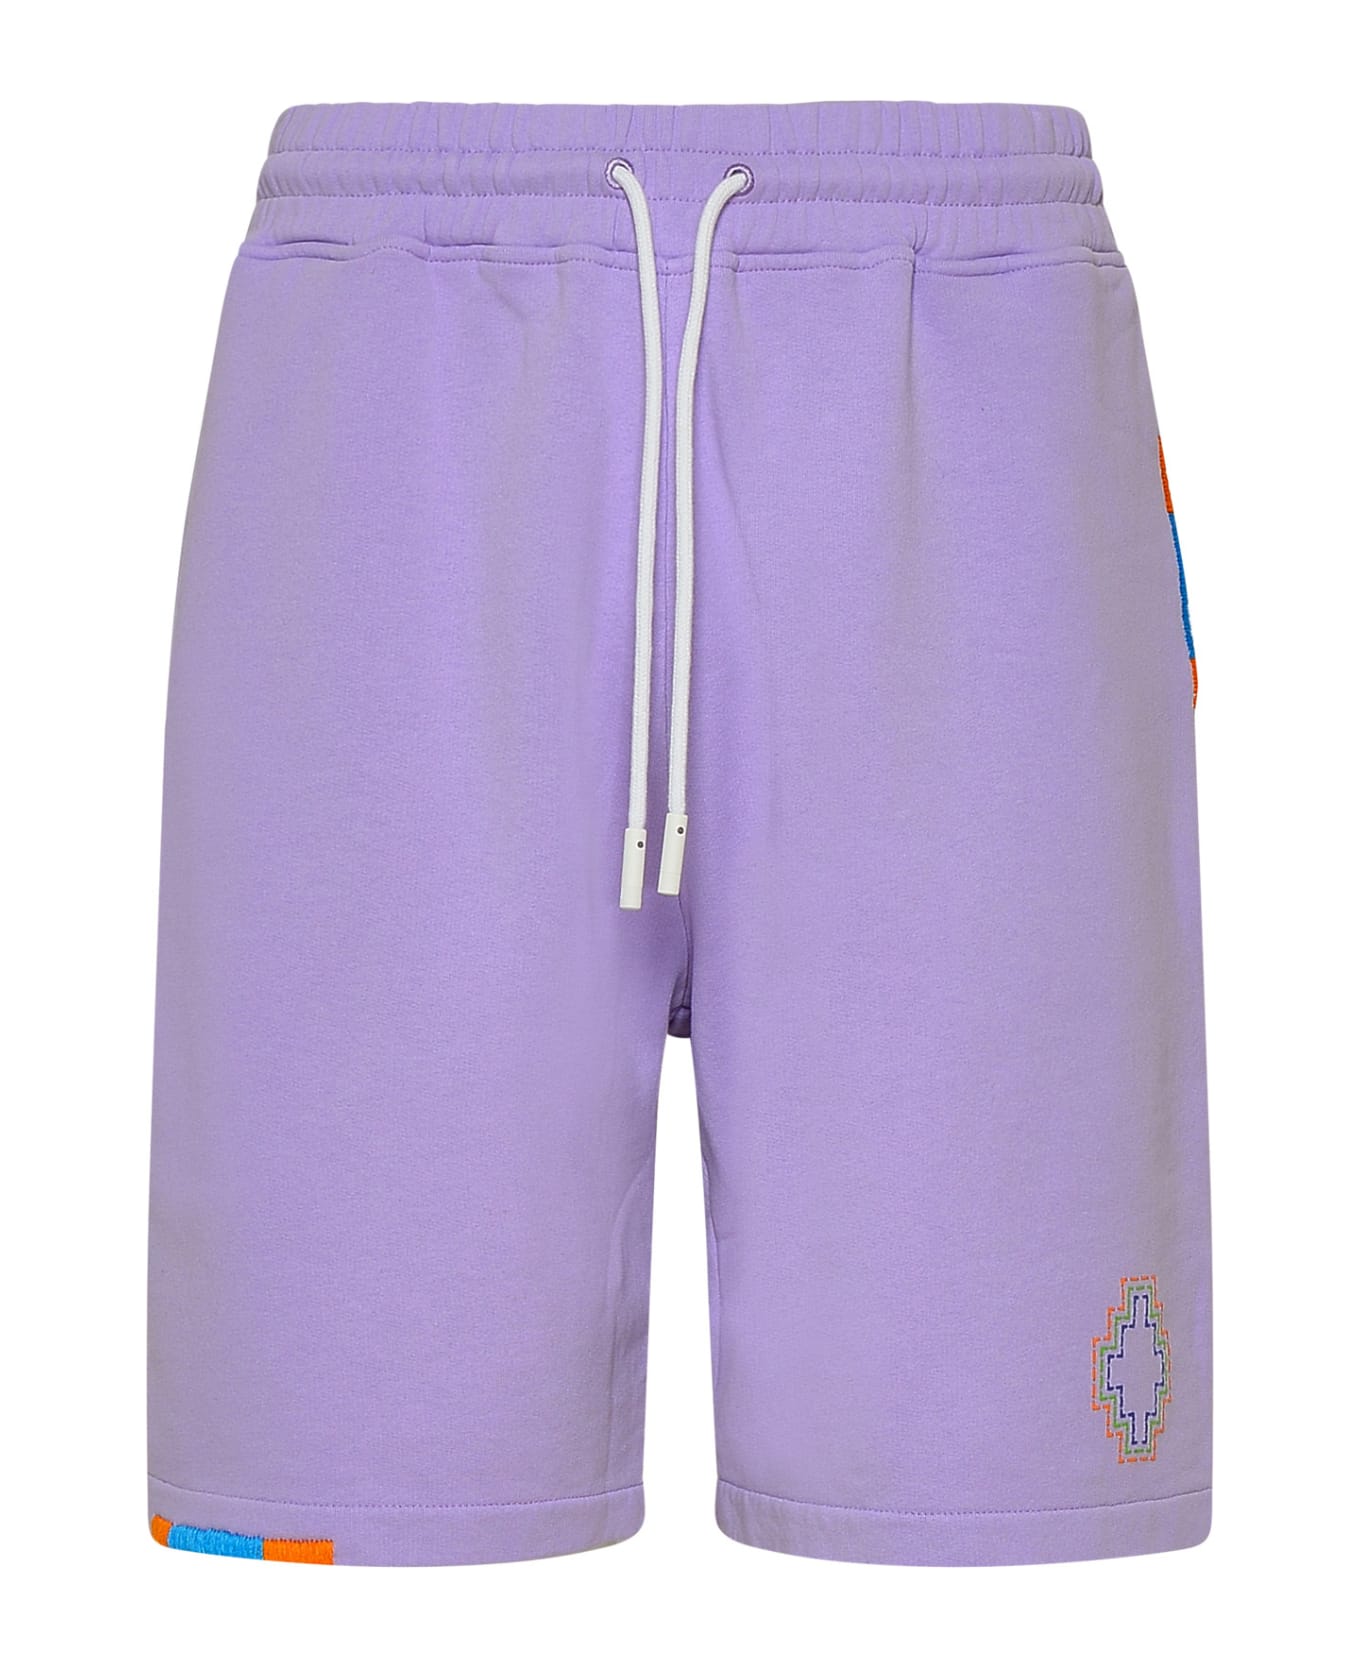 Marcelo Burlon Bermuda Shorts - Pink